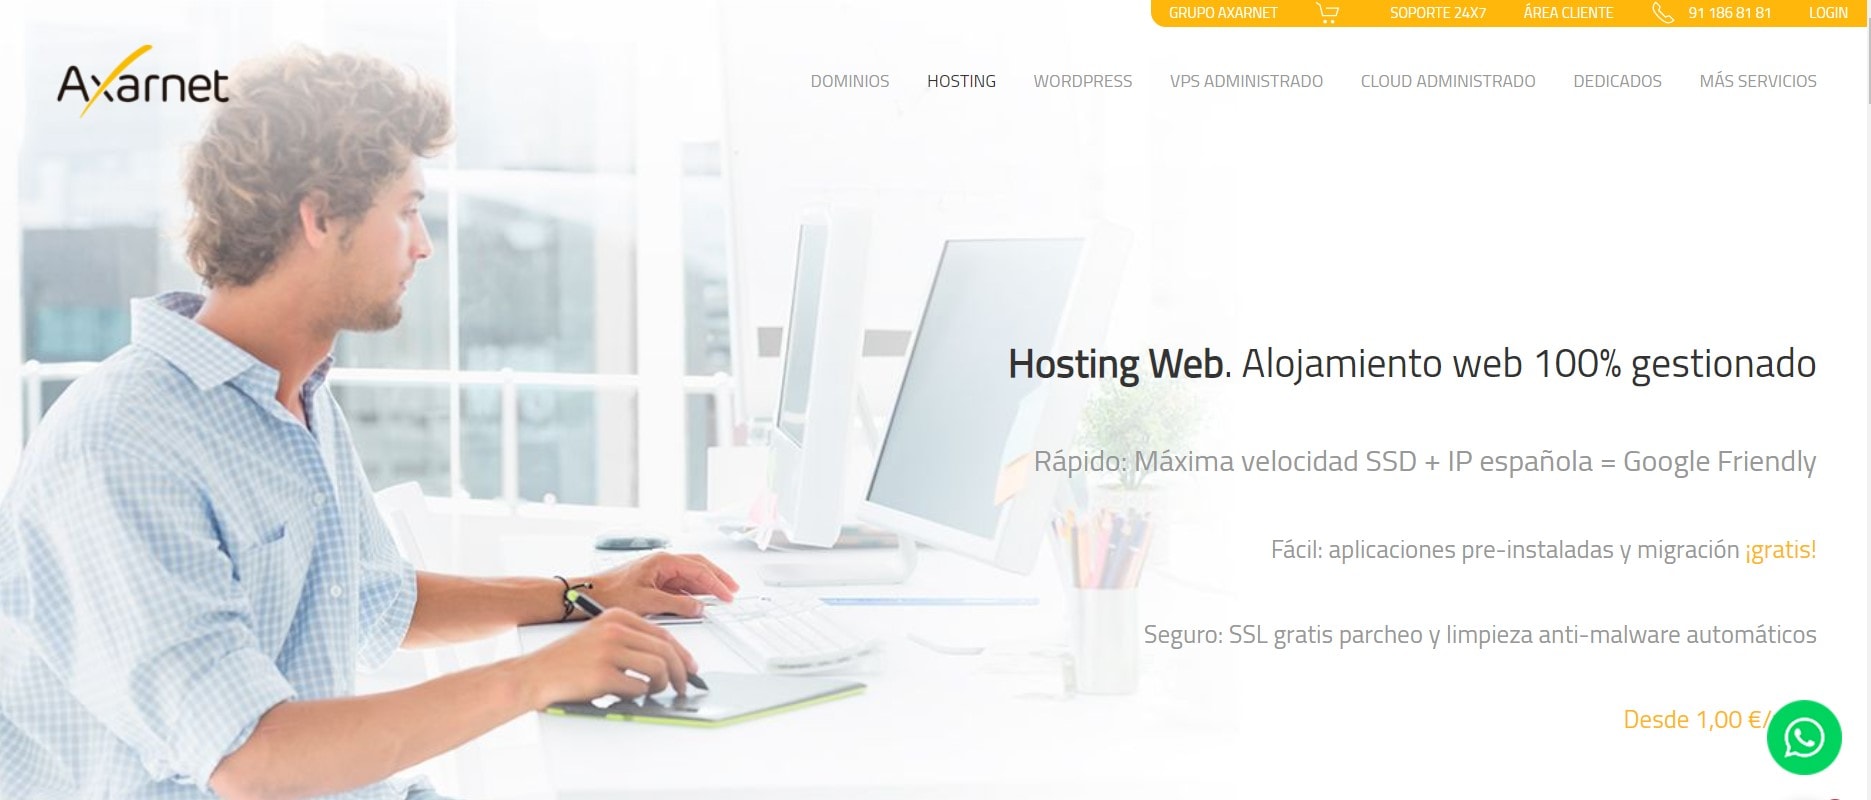 axarnet homepage